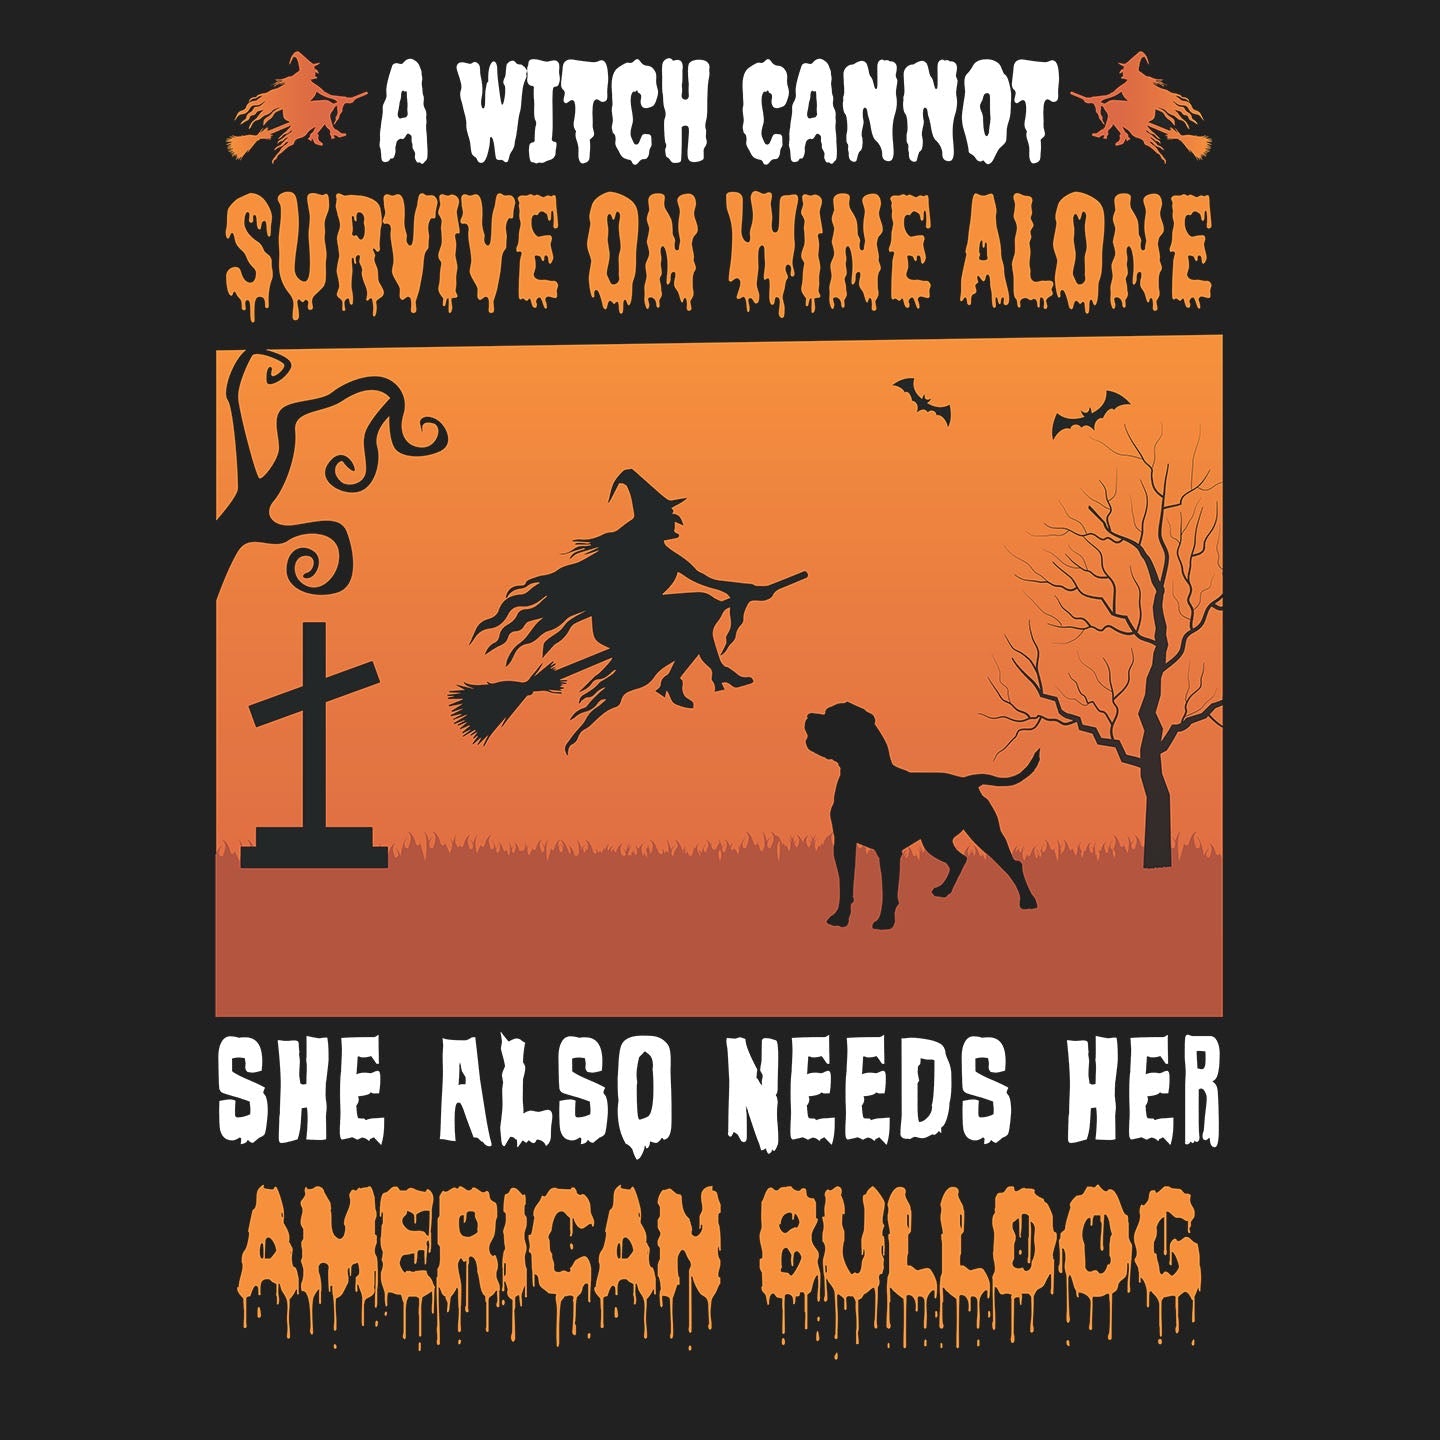 A Witch Needs Her American Bulldog - Adult Unisex Crewneck Sweatshirt